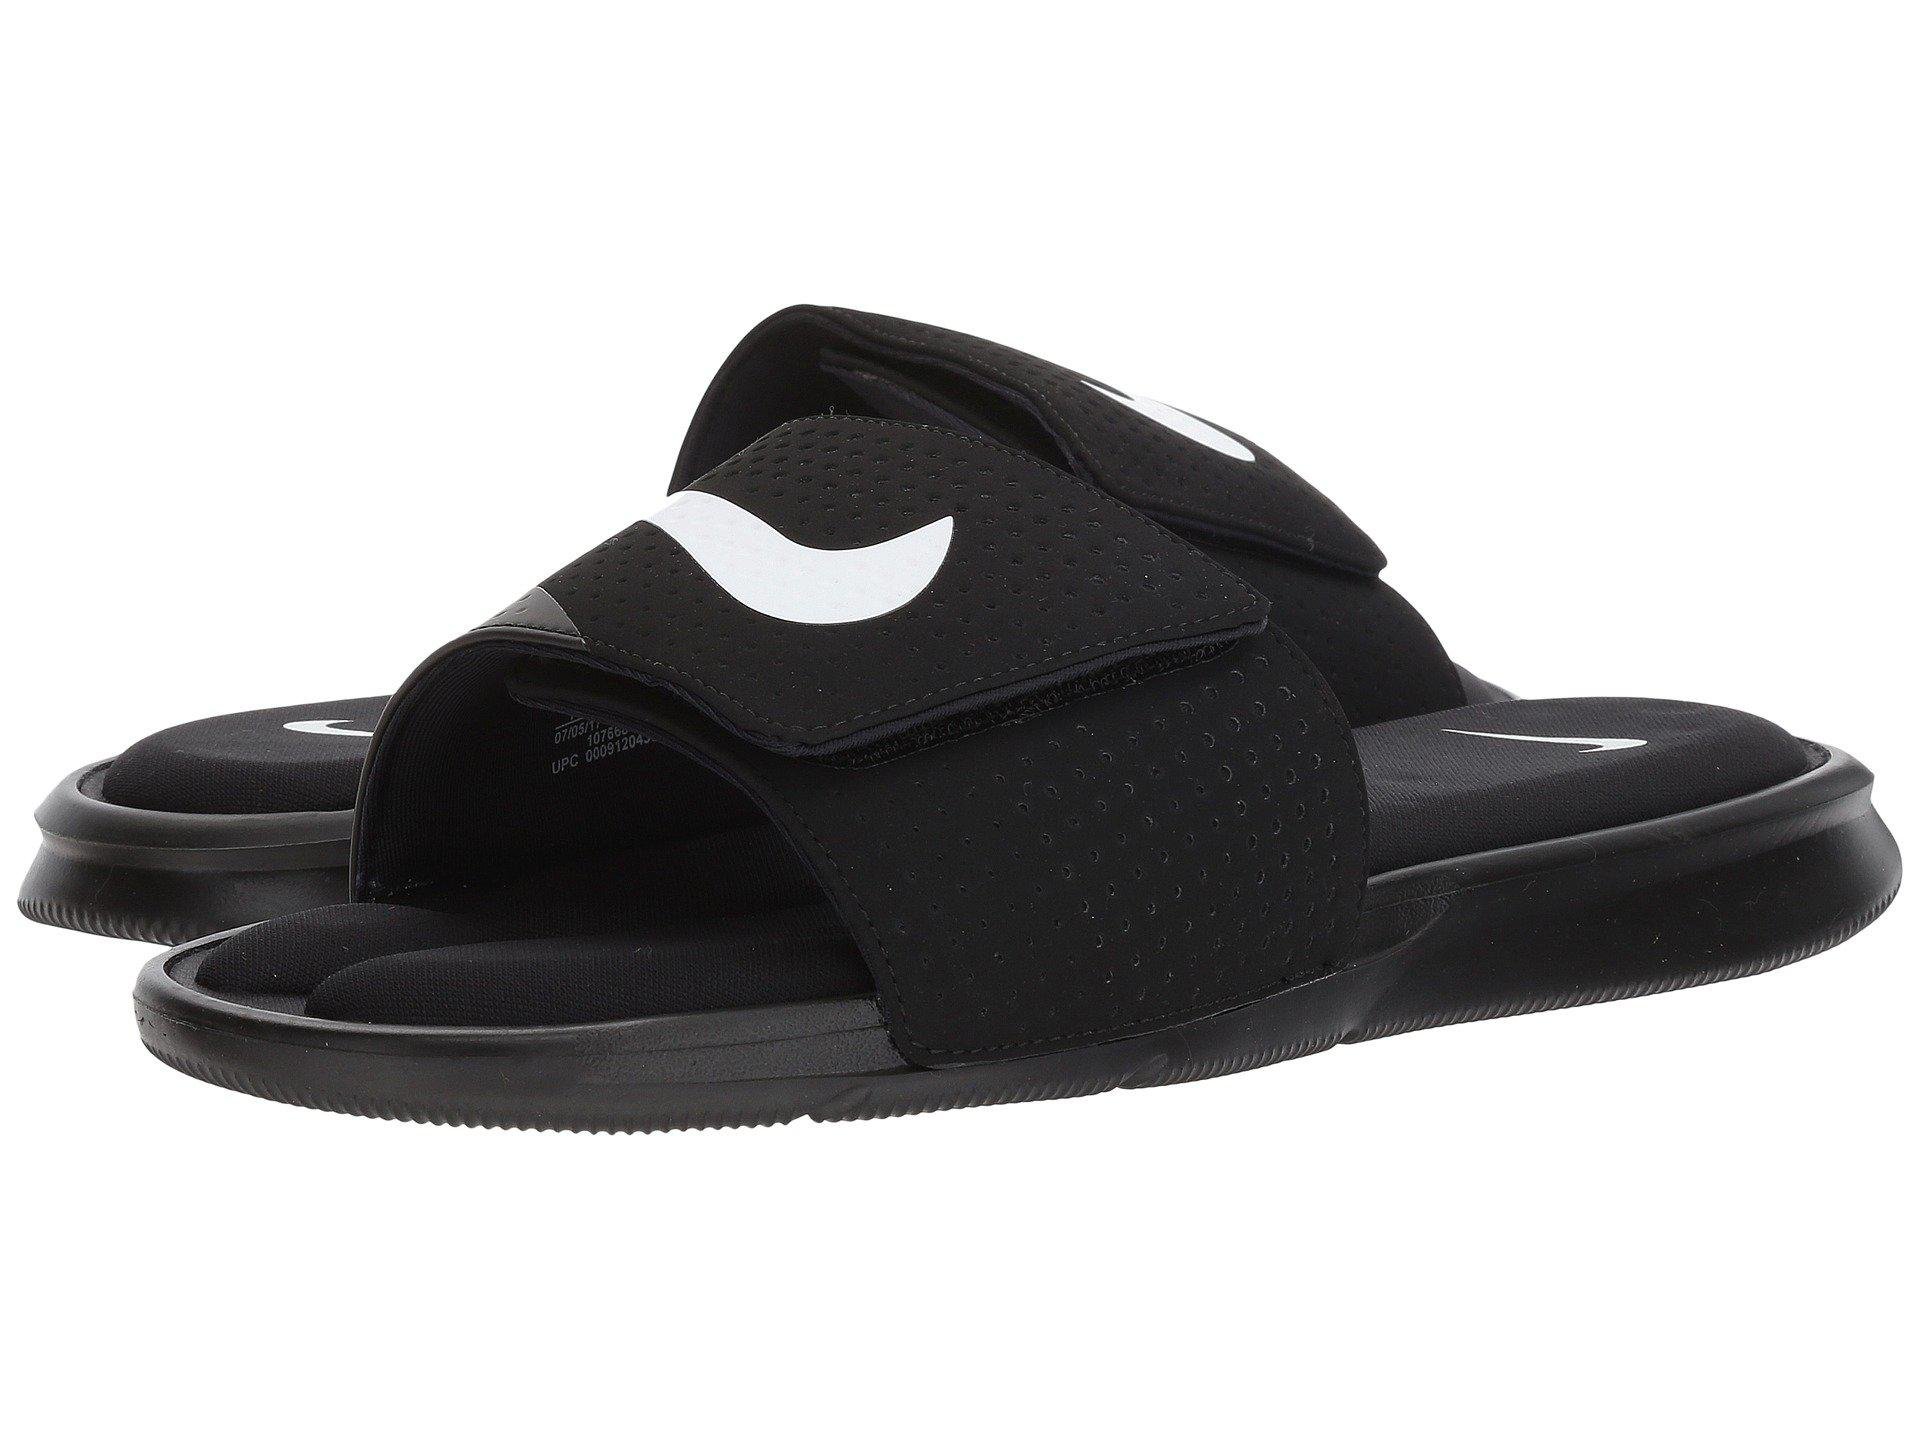 Lyst - Nike Ultra Comfort Slide Sandal in Black for Men - Save 25%